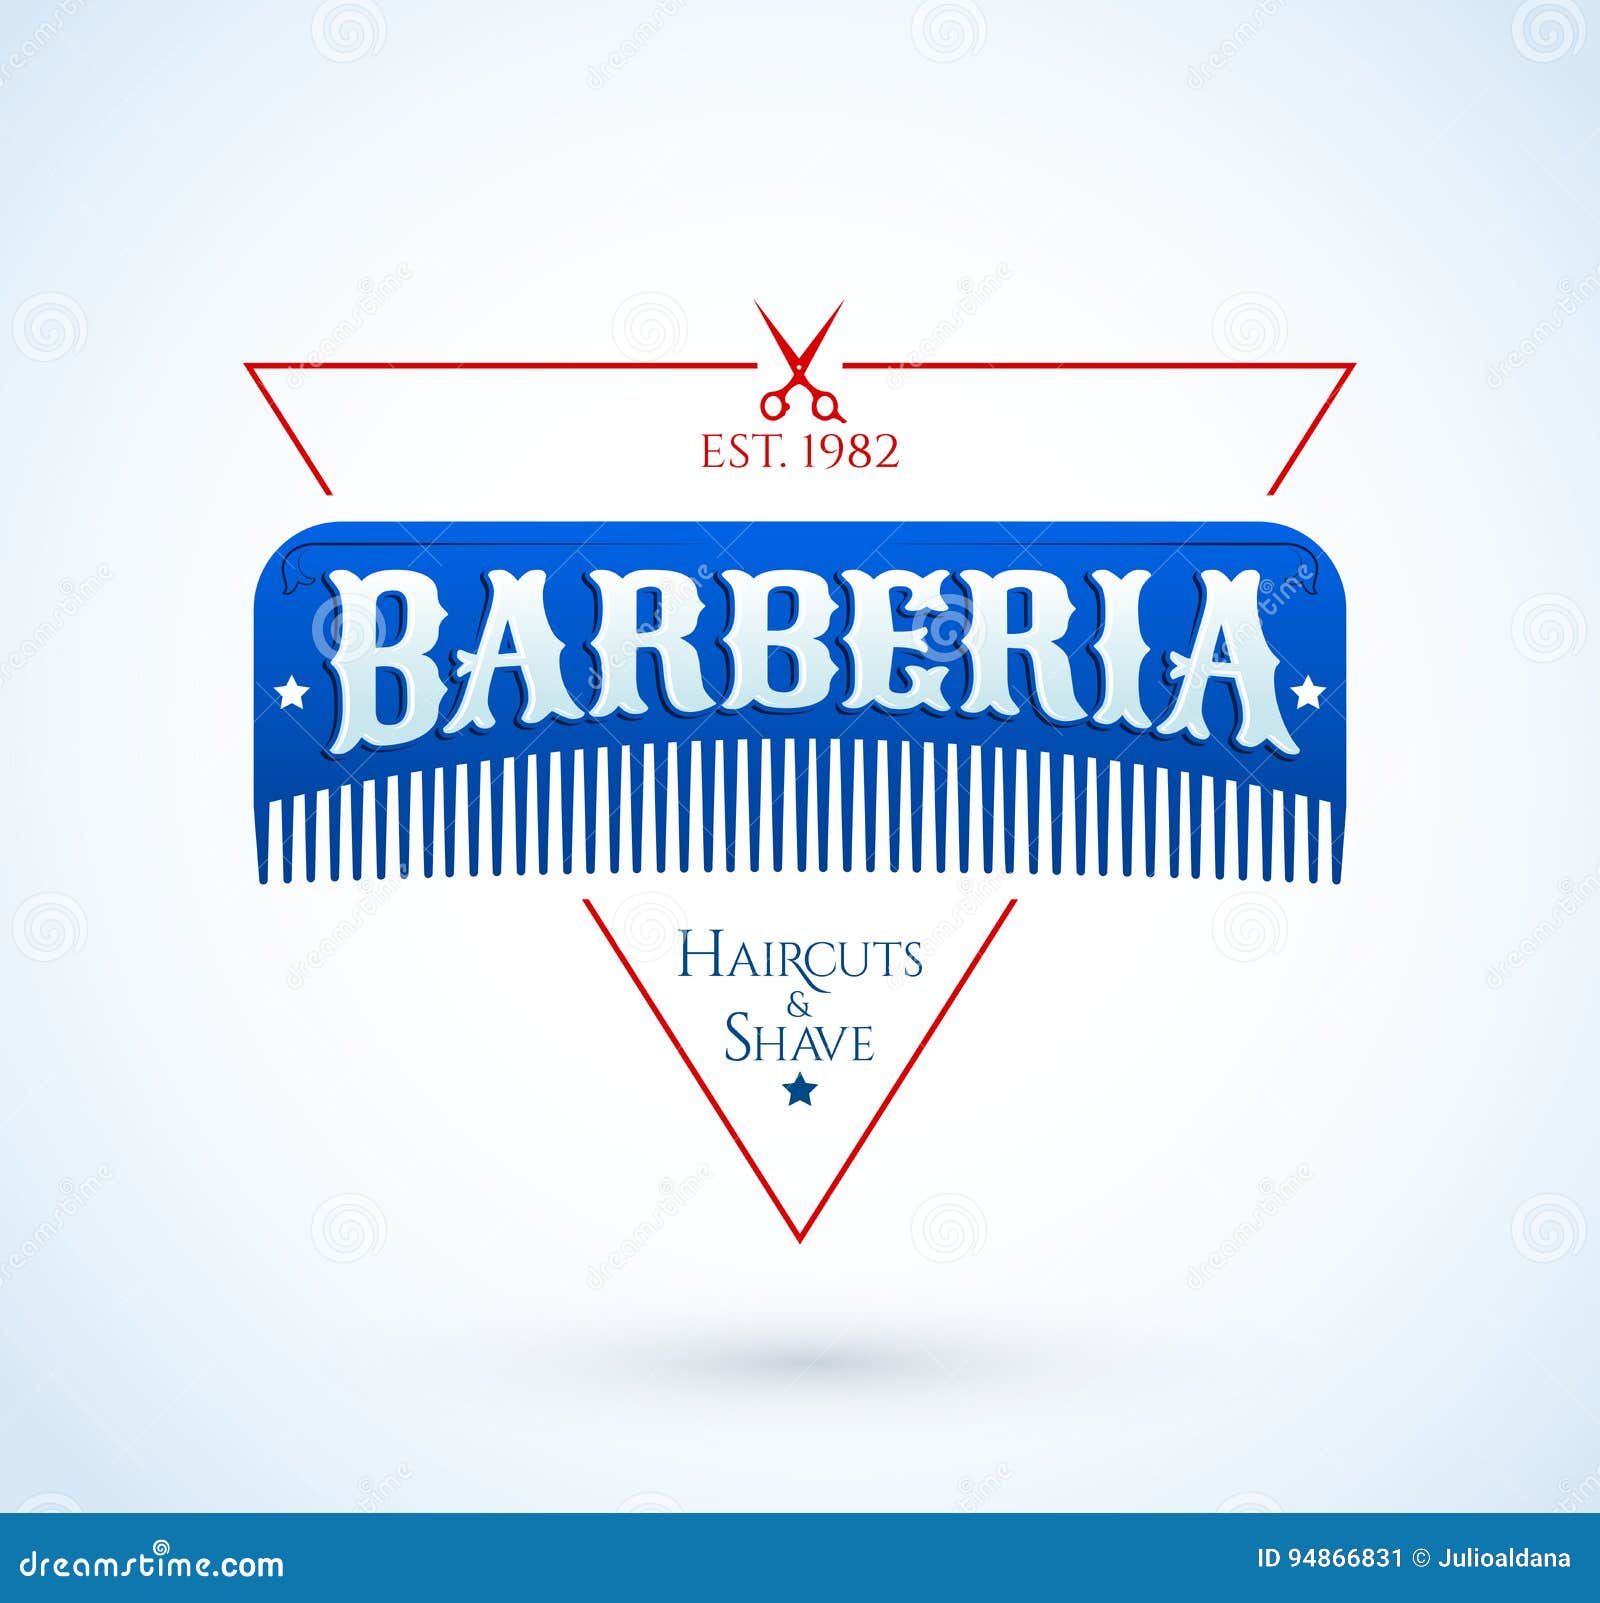 barberia, barbershop spanish text